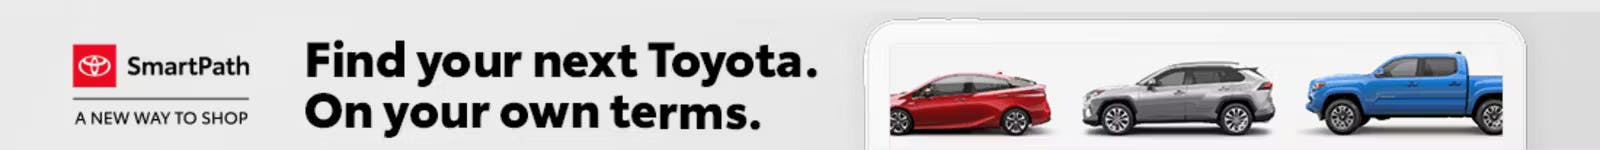 Toyota SmartPath Banner